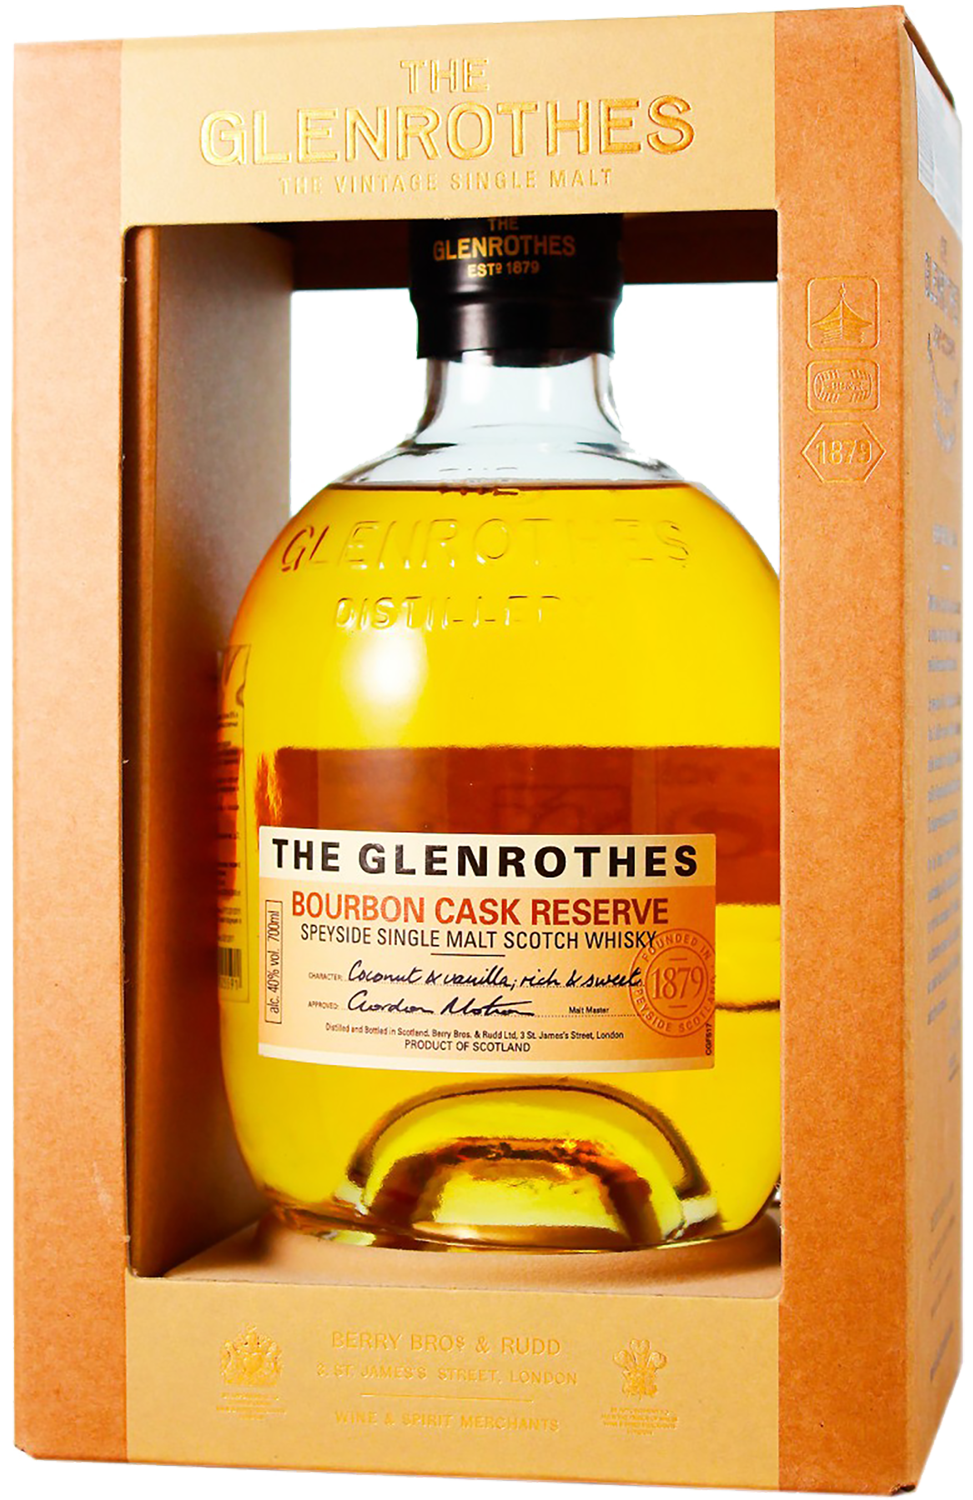 The Glenrothes Bourbon Cask Reserve Speyside Single Malt Scotch Whisky (gift box) mossburn vintage casks no 26 glenrothes single malt scotch whisky gift box